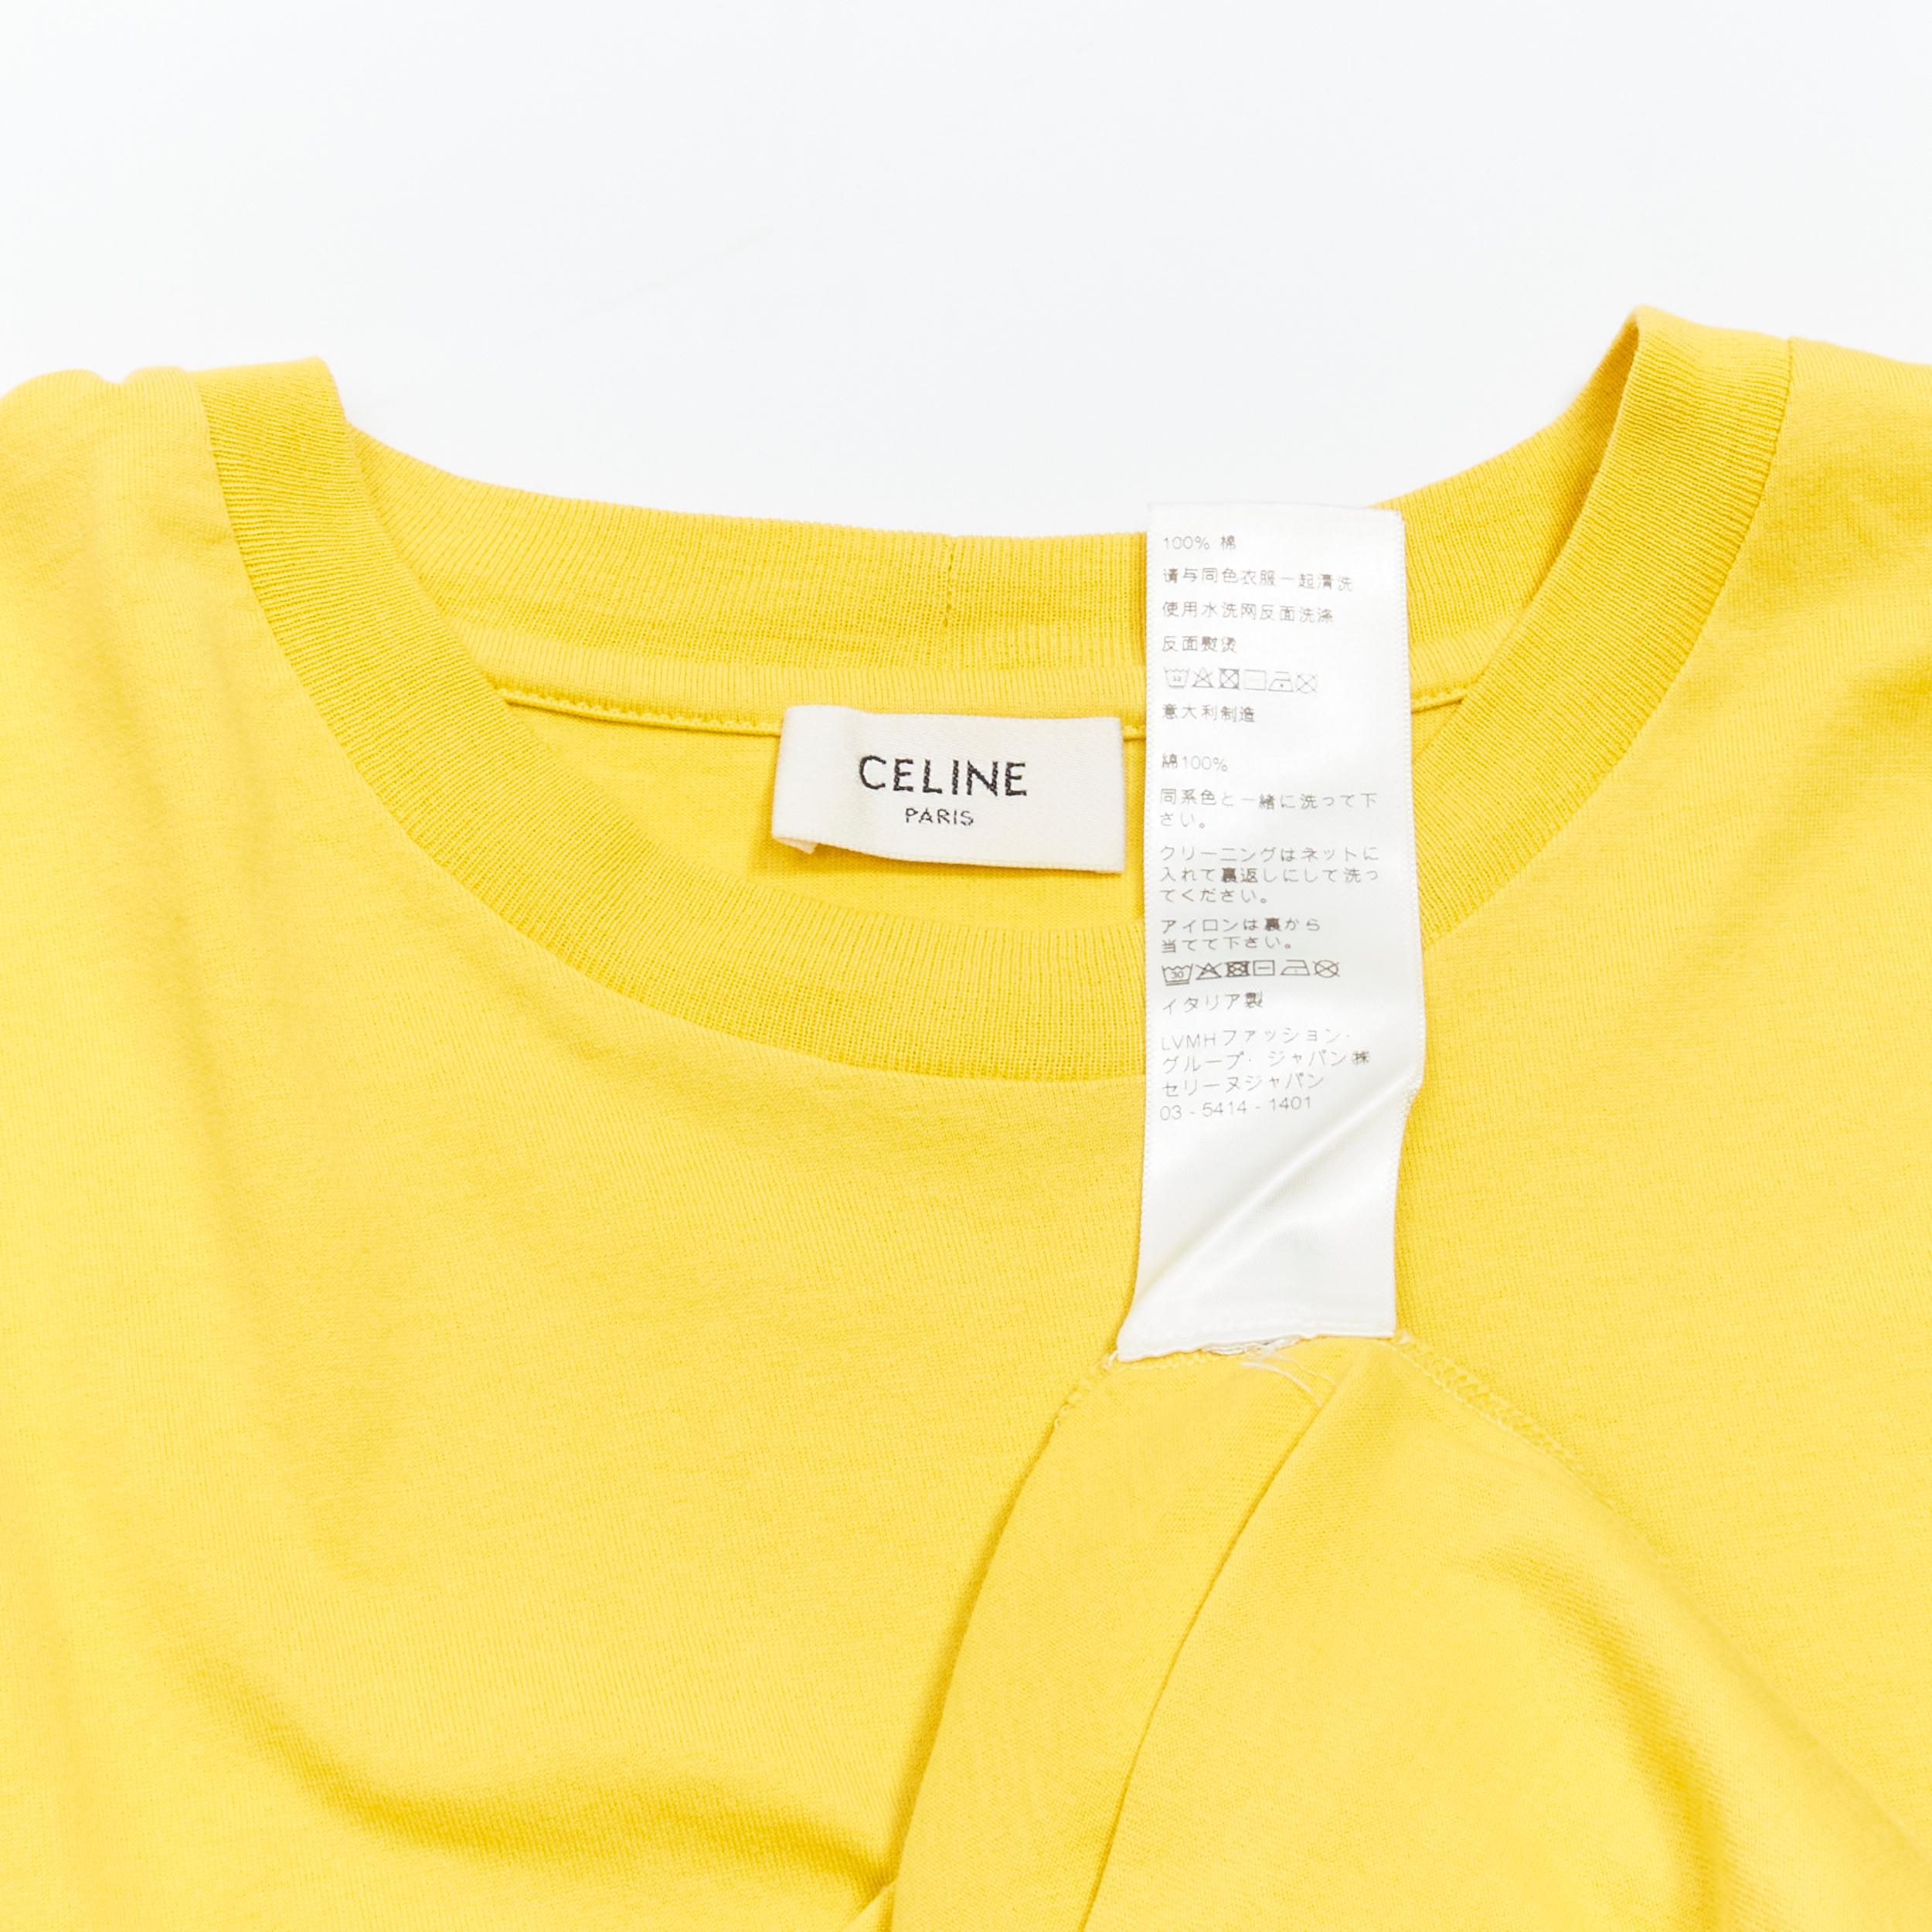 CELINE Hedi Slimane yellow black logo cotton short sleeves round neck tshirt XS For Sale 3